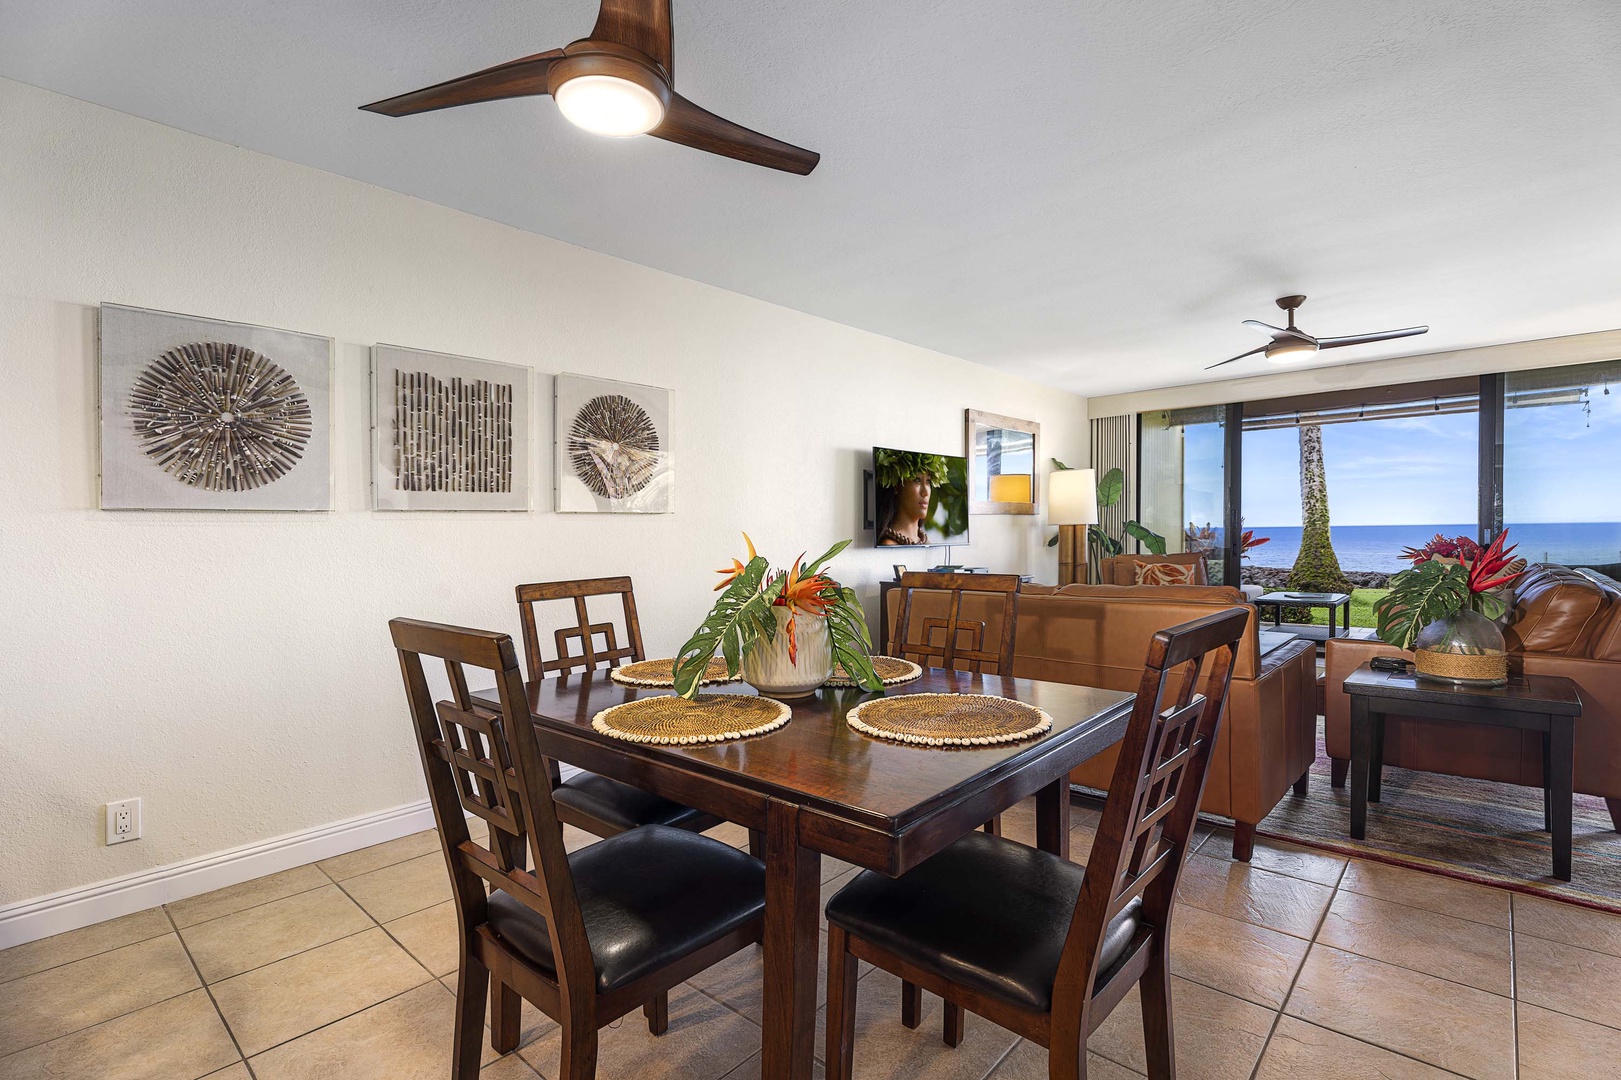 Kailua Kona Vacation Rentals, Keauhou Kona Surf & Racquet 2101 - Dining table with four seats.